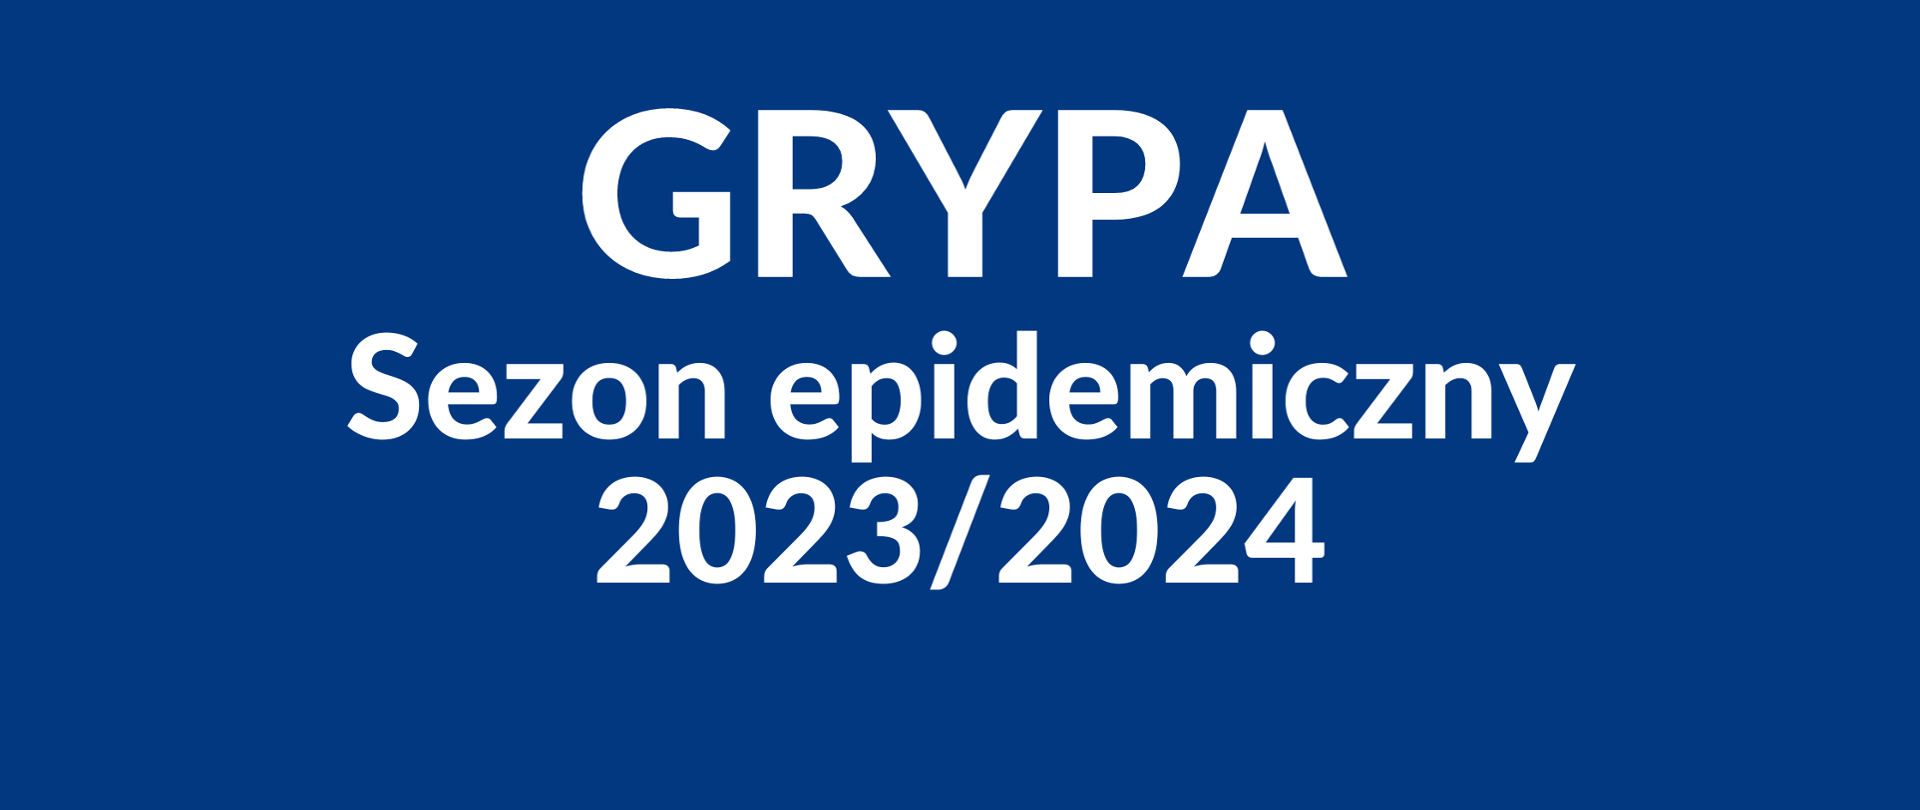 grypa sezon epidemiczny 2023/2024